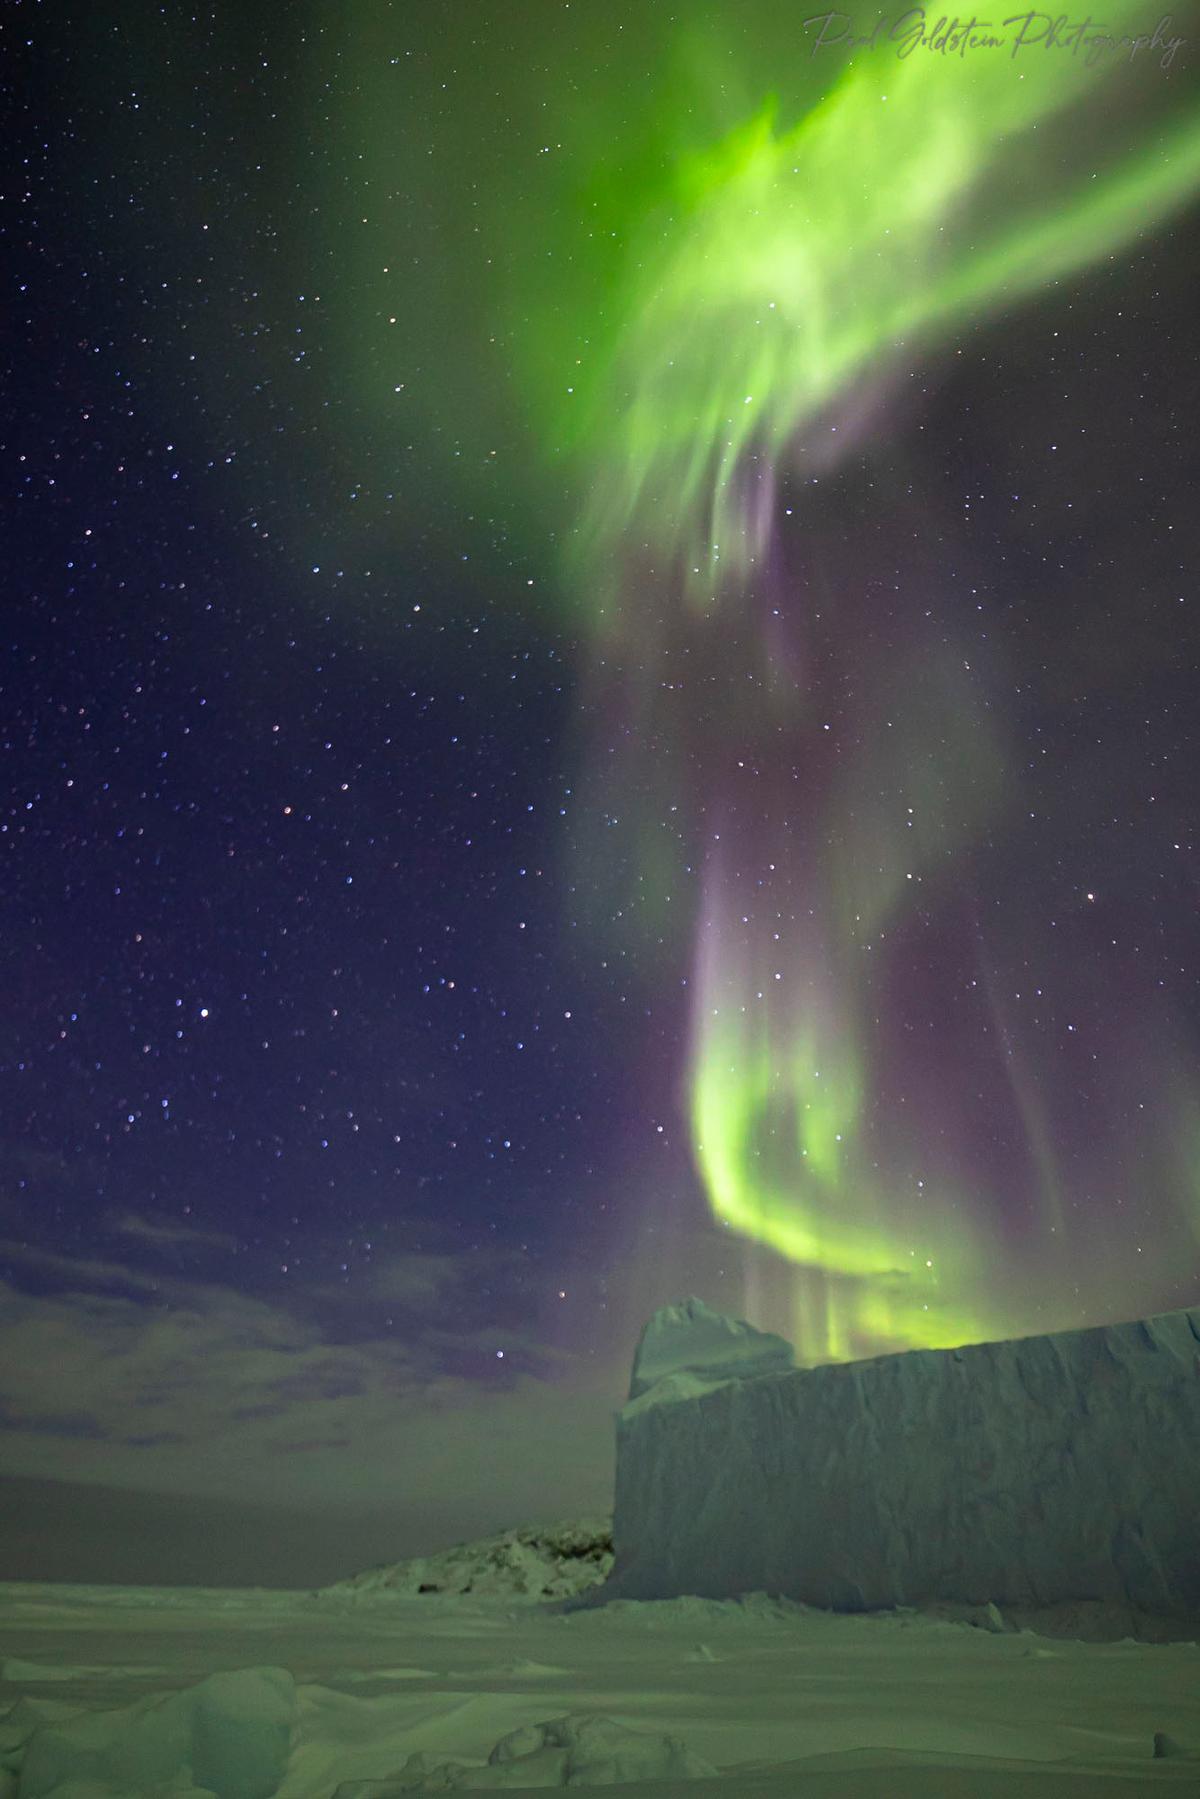 Northern lights dancing in Nunavut, Canada. (Courtesy of <a href="https://www.instagram.com/paulsgoldstein/">Paul Goldstein</a>)